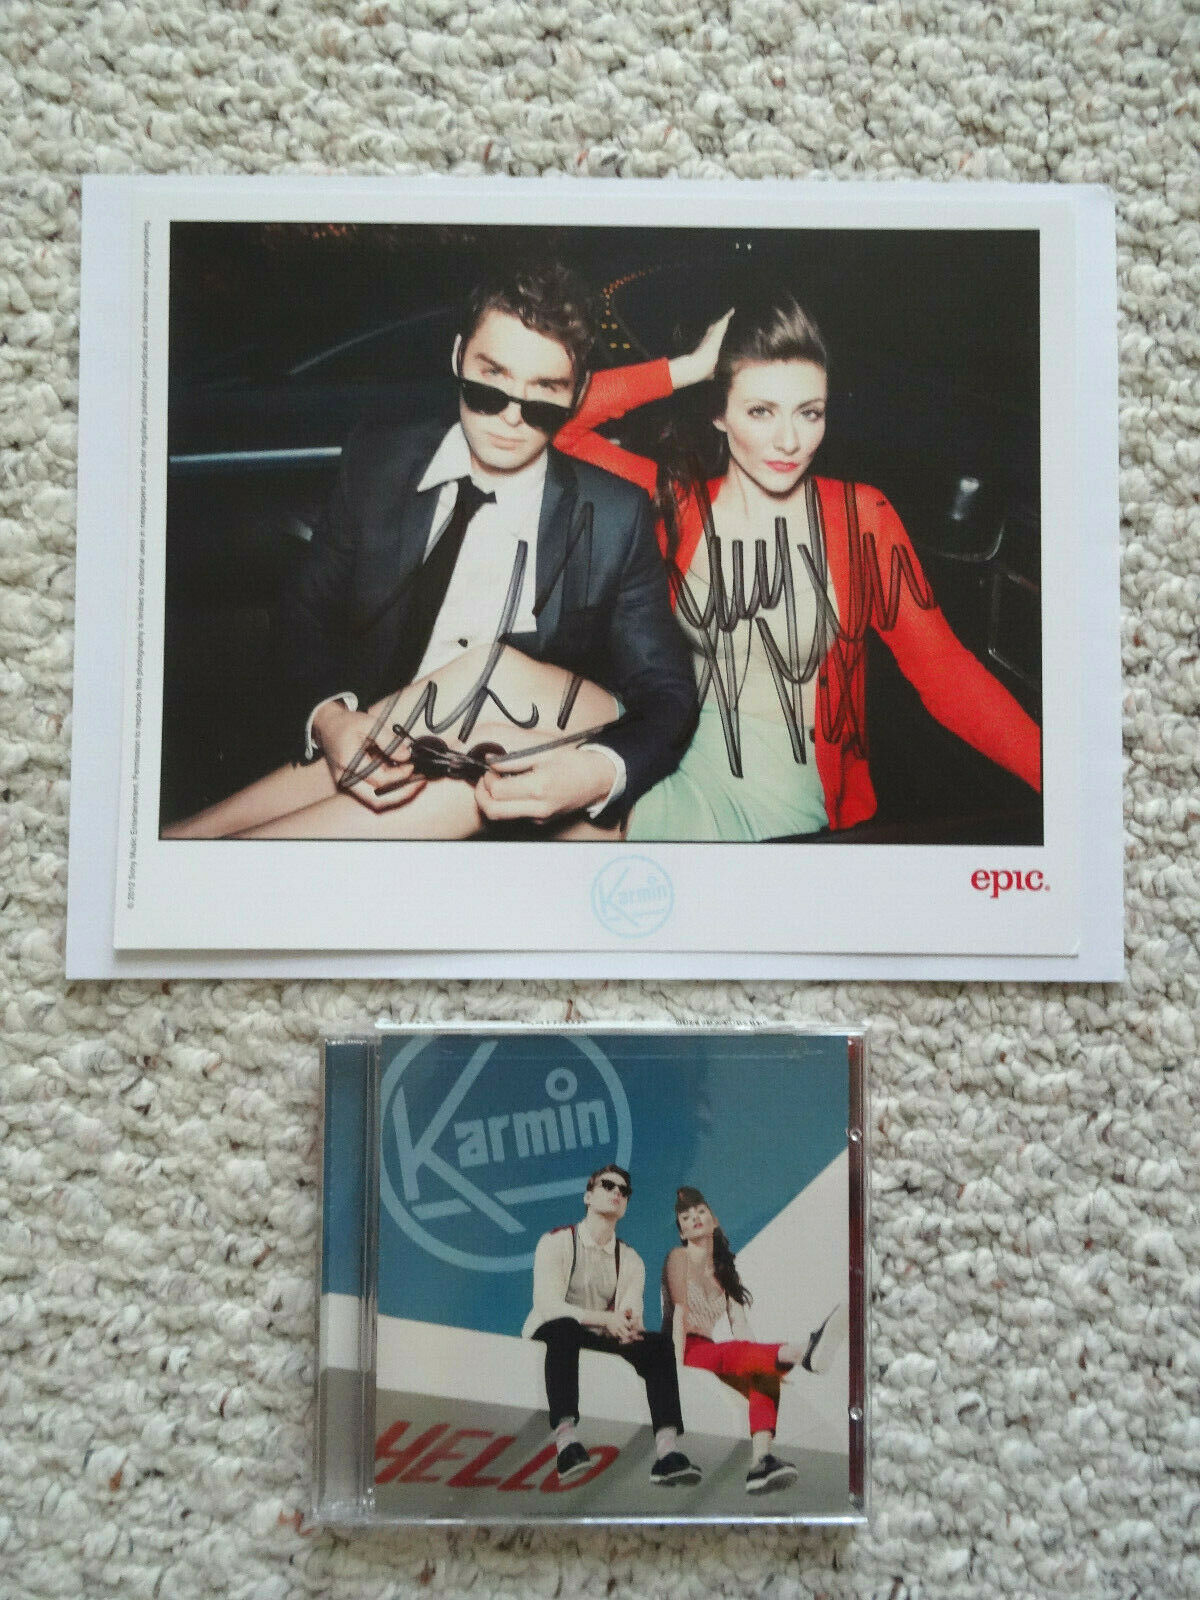 Signed / Autographed Karmin Promo 8x10 Photo W/ Cd Brokenhearted Pulses Coa